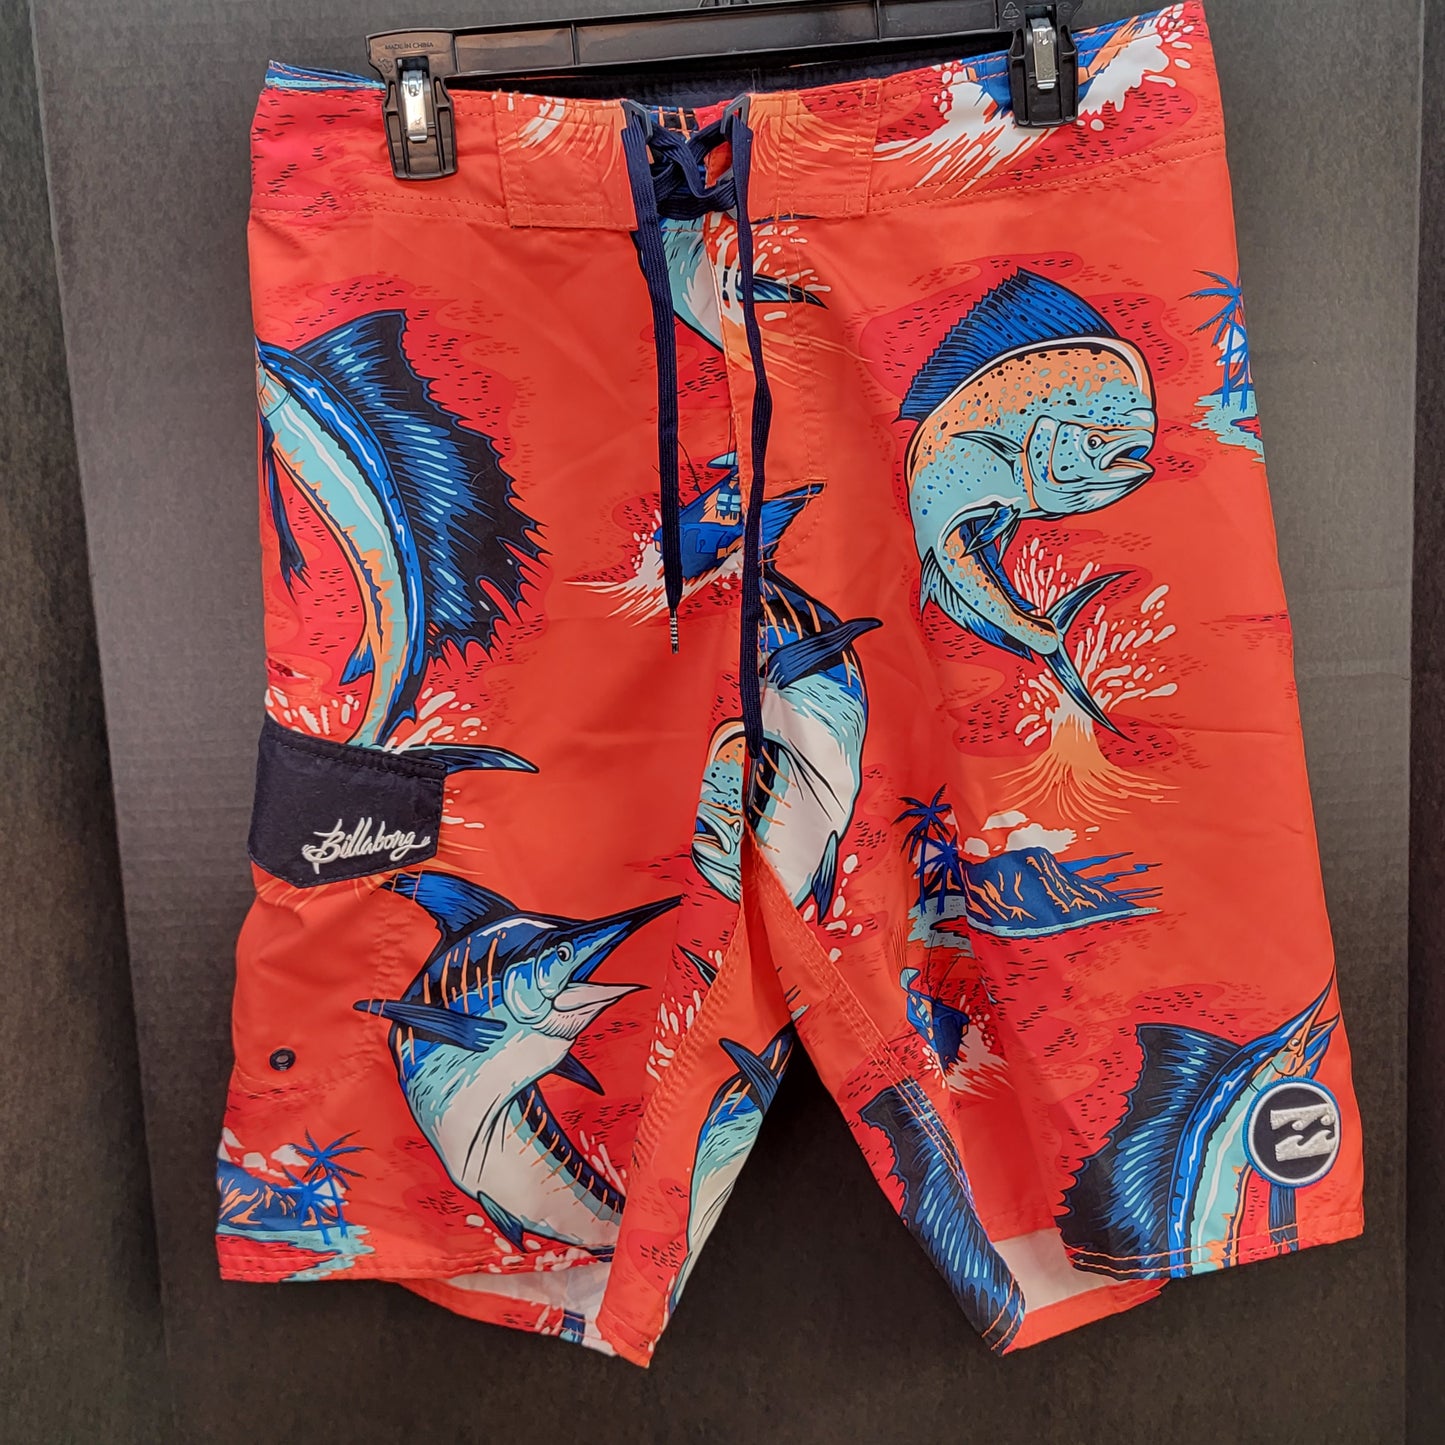 Billabong Men's Board Shorts Orange with Fish Size 32 Retail $49.50